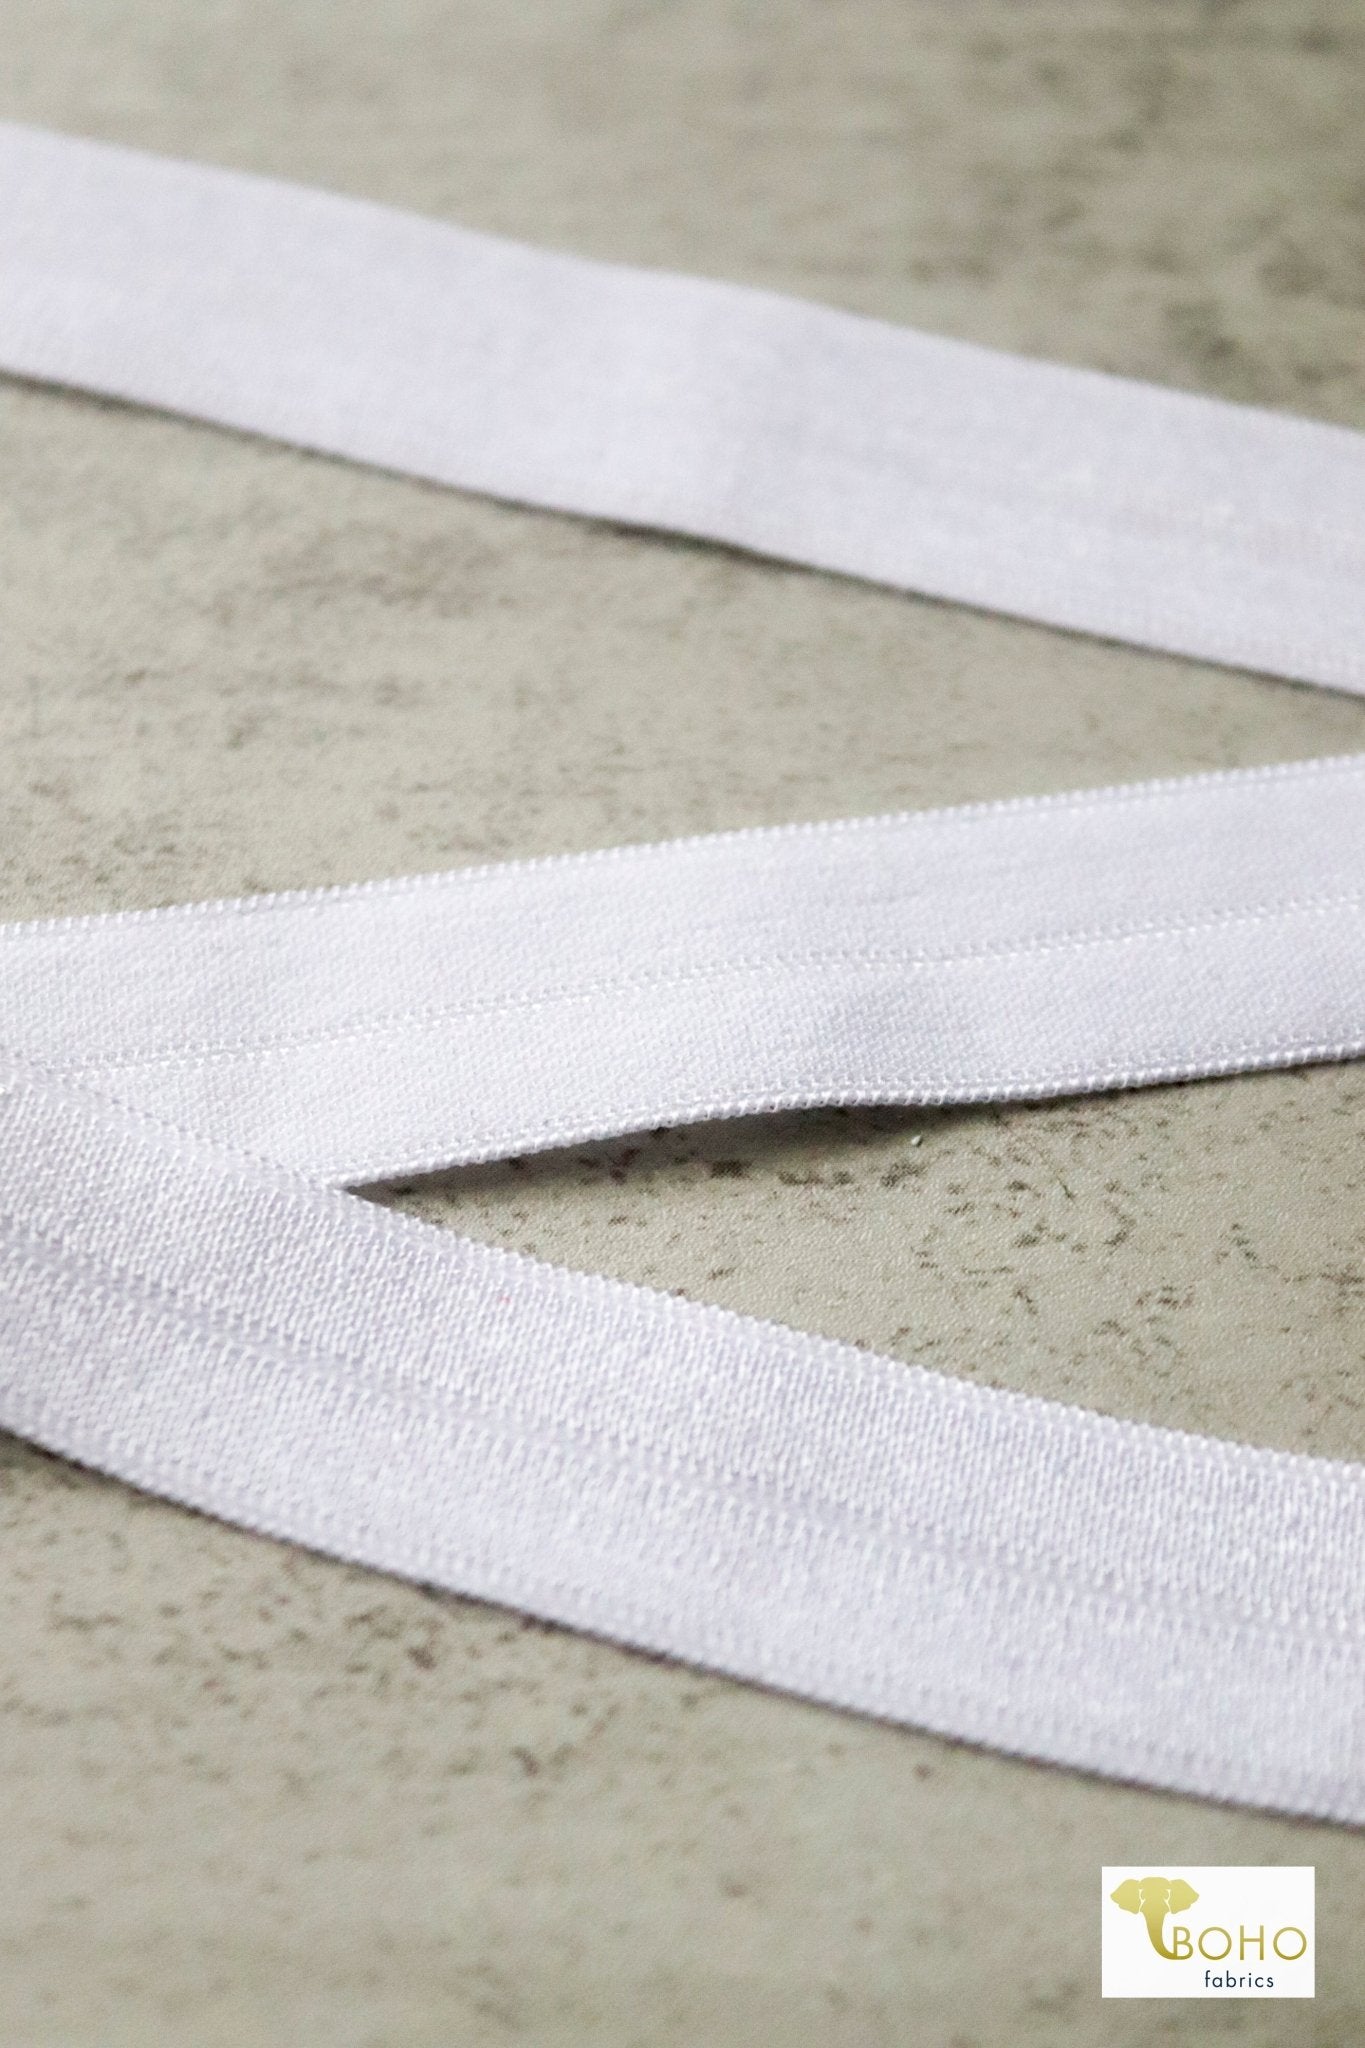 5/8" White, Fold Over Elastic. SOLD PER PACKAGE OF 3 YARDS. - Boho Fabrics